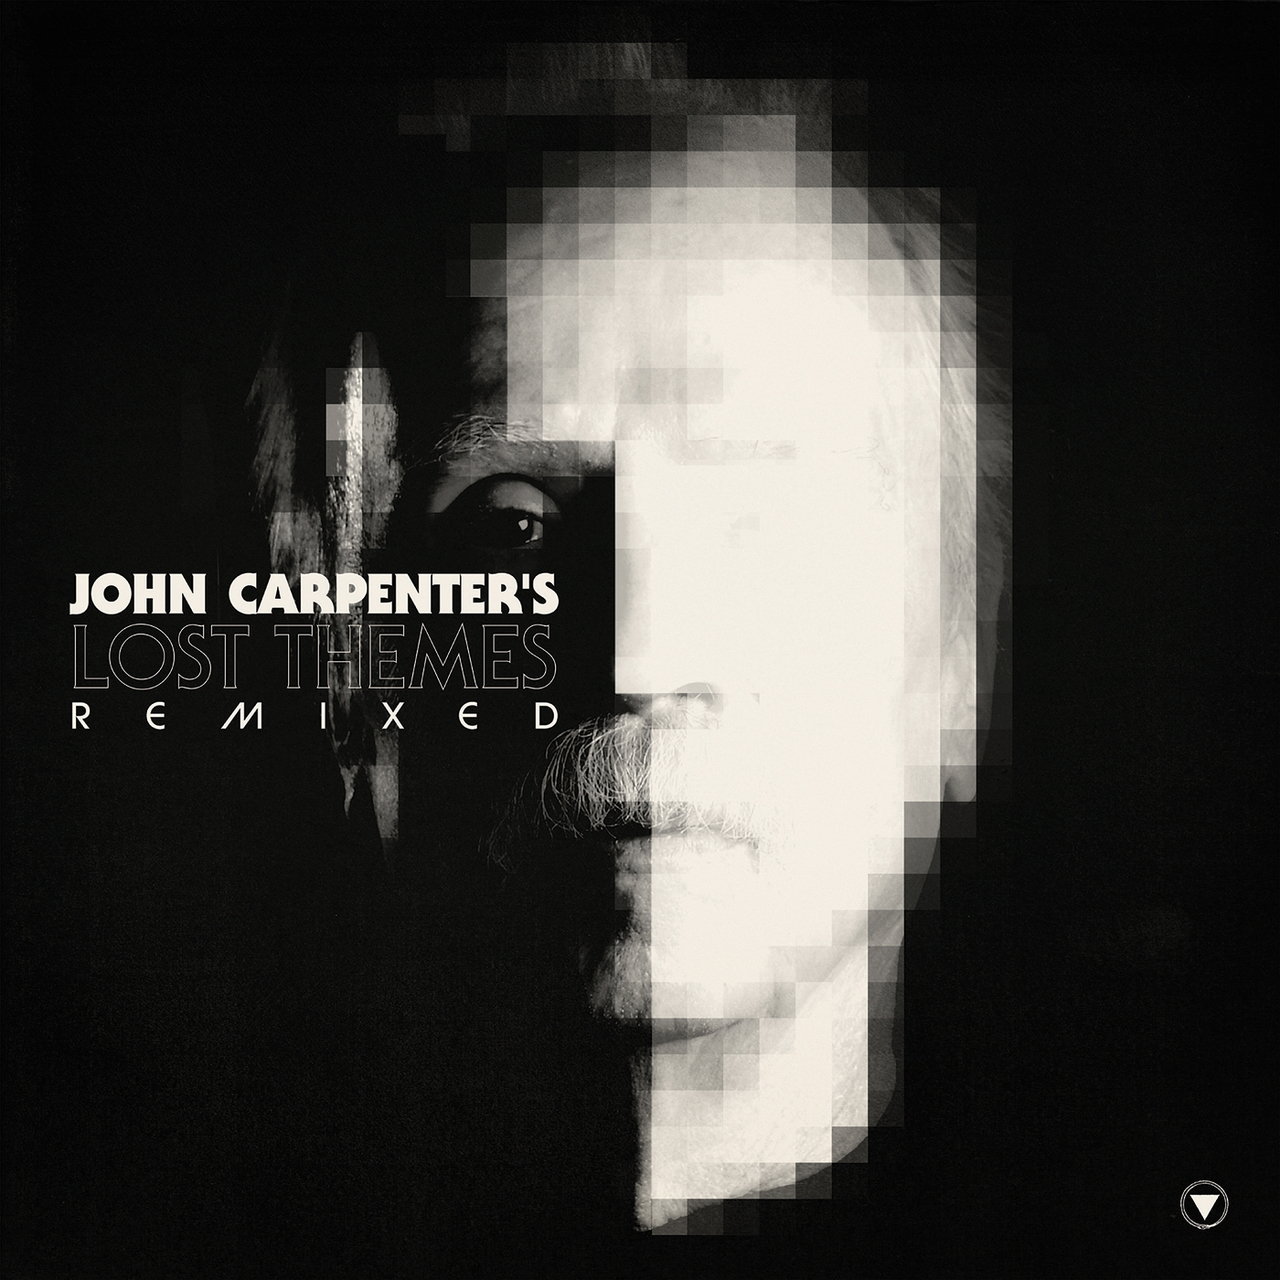 000-John Carpenter-Lost Themes Remixed- [SBR-120]